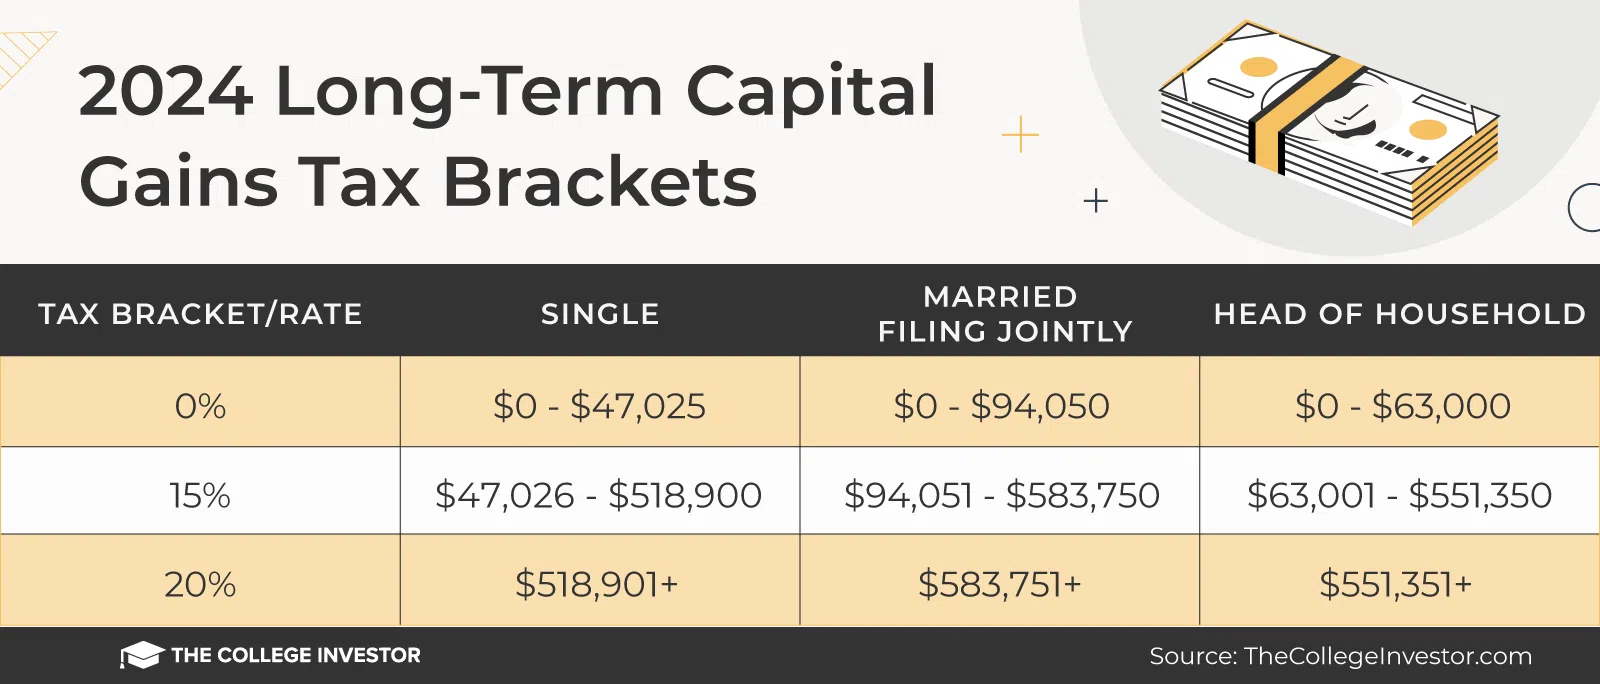 chart showing 2024 long-term capital gains tax brackets